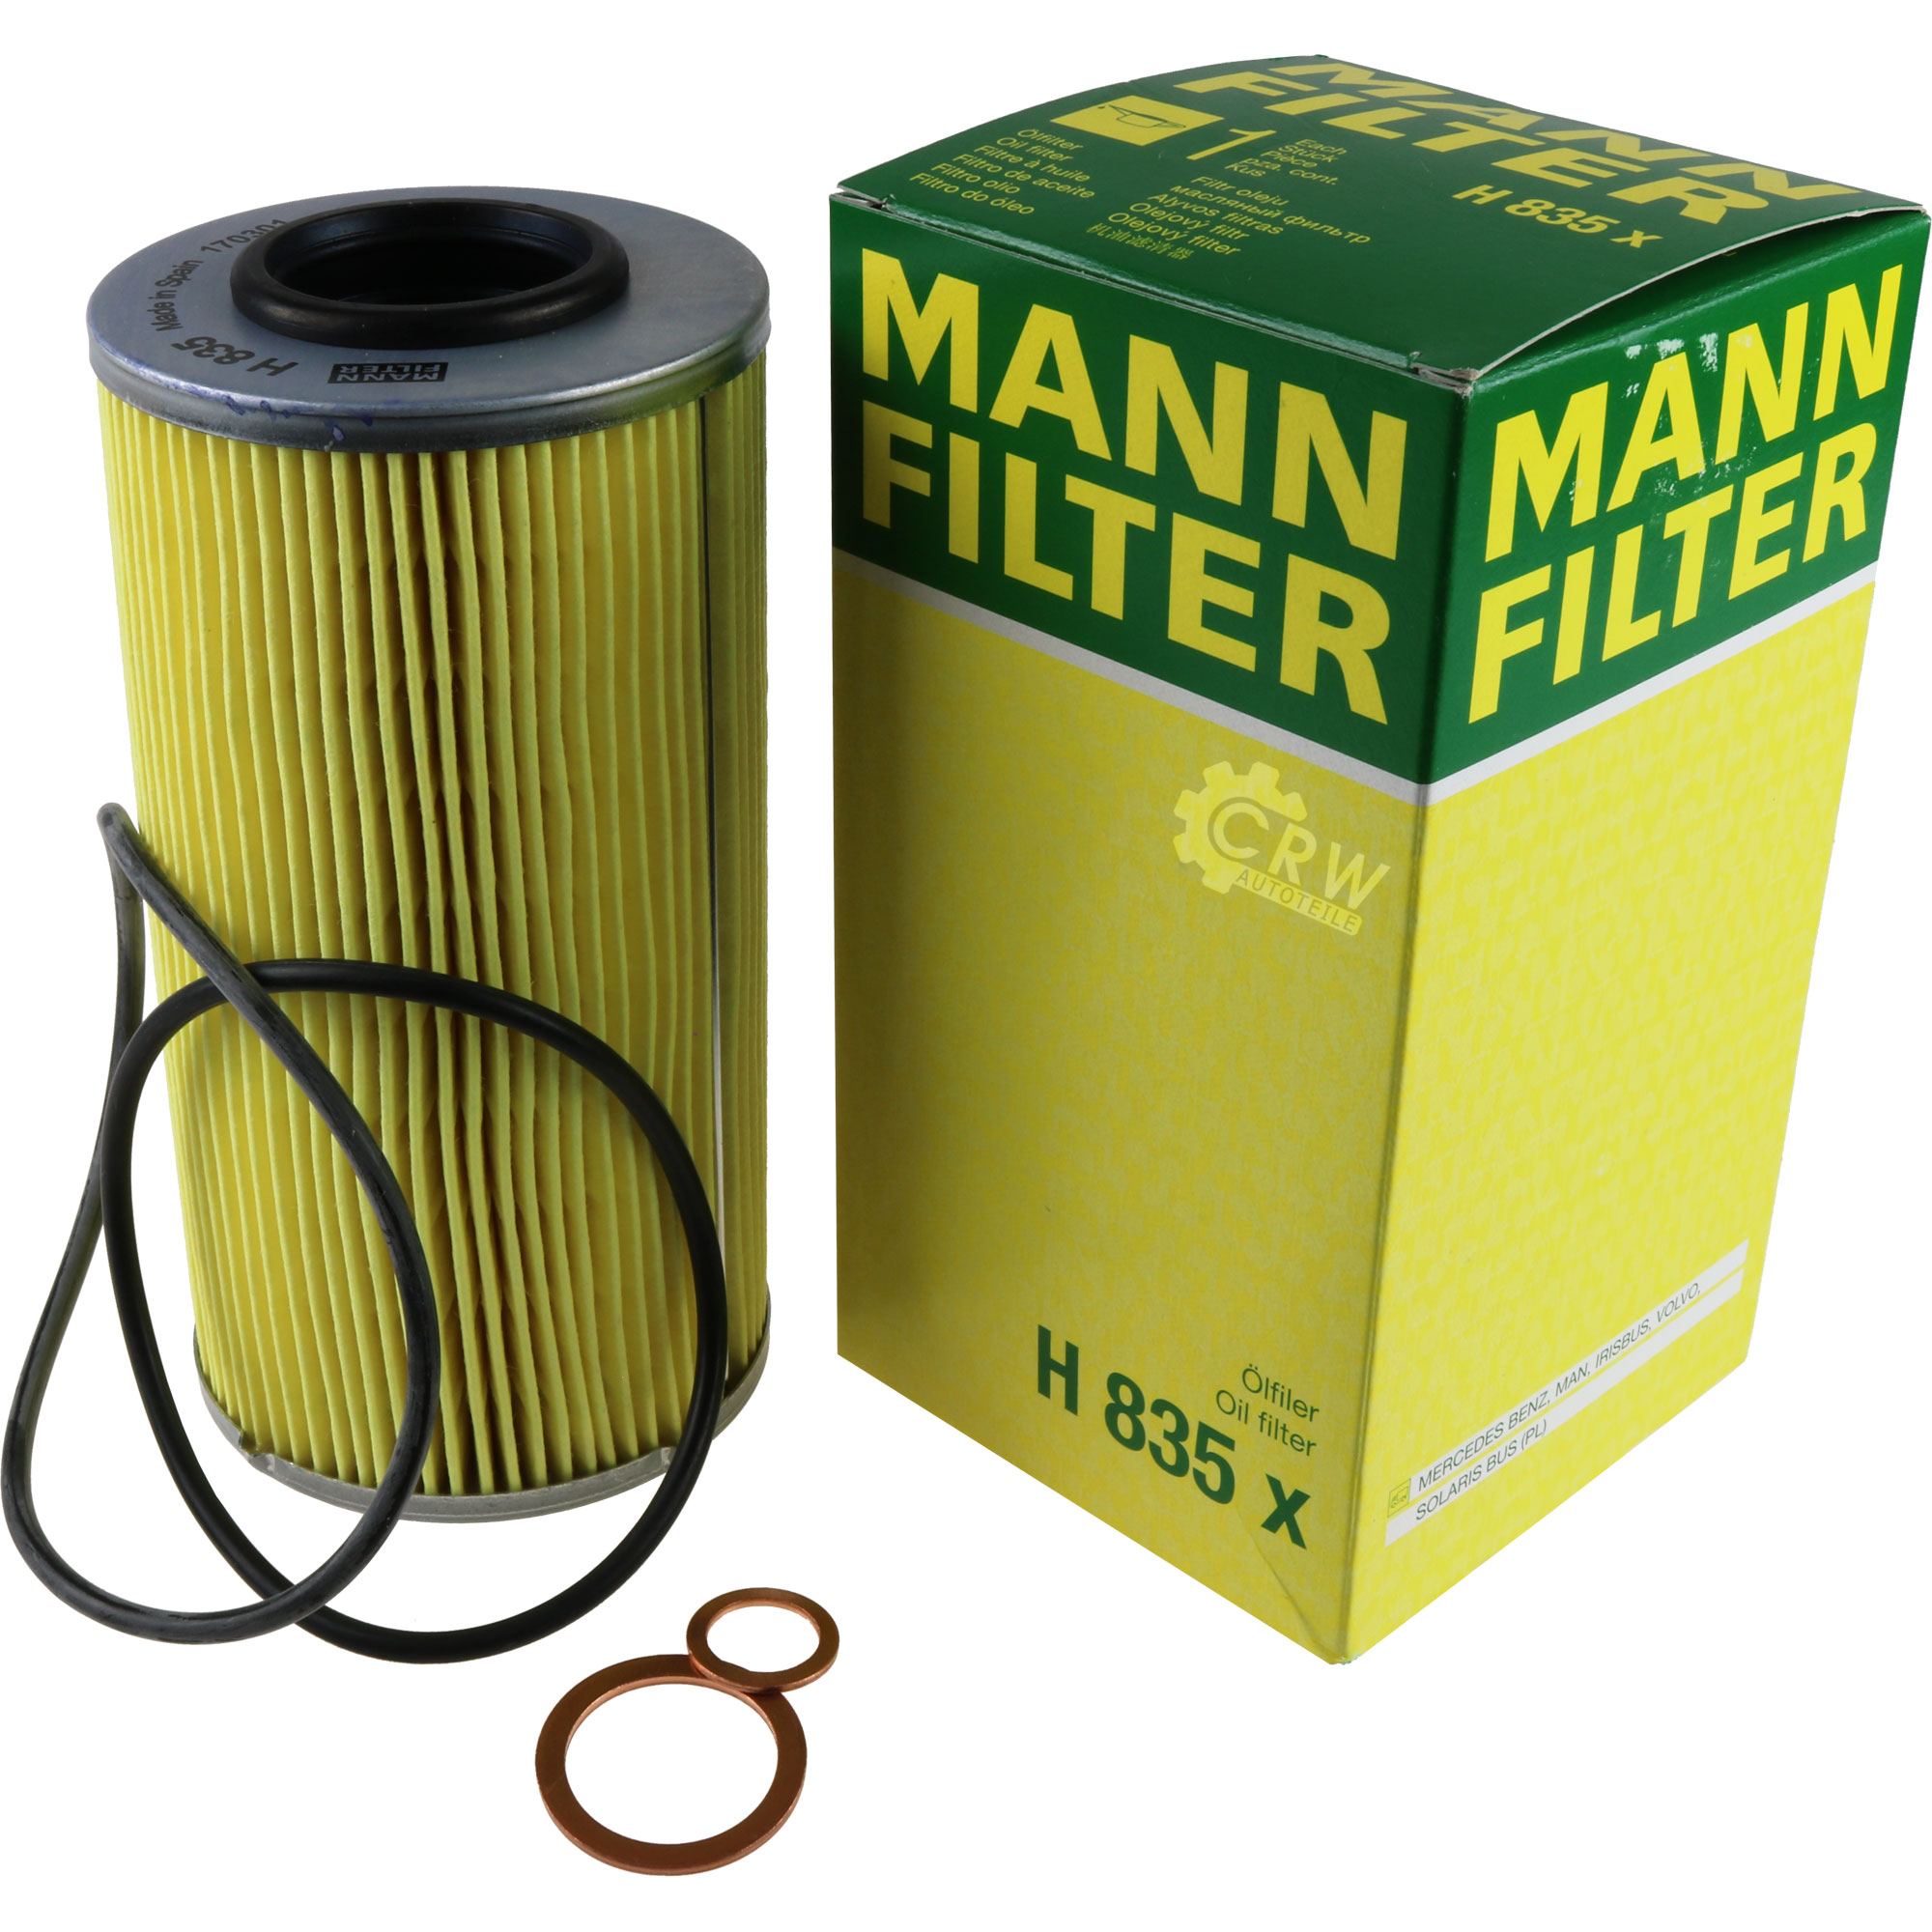 MANN-FILTER Hydraulikfilter für Automatikgetriebe H 835 x Ölfilter